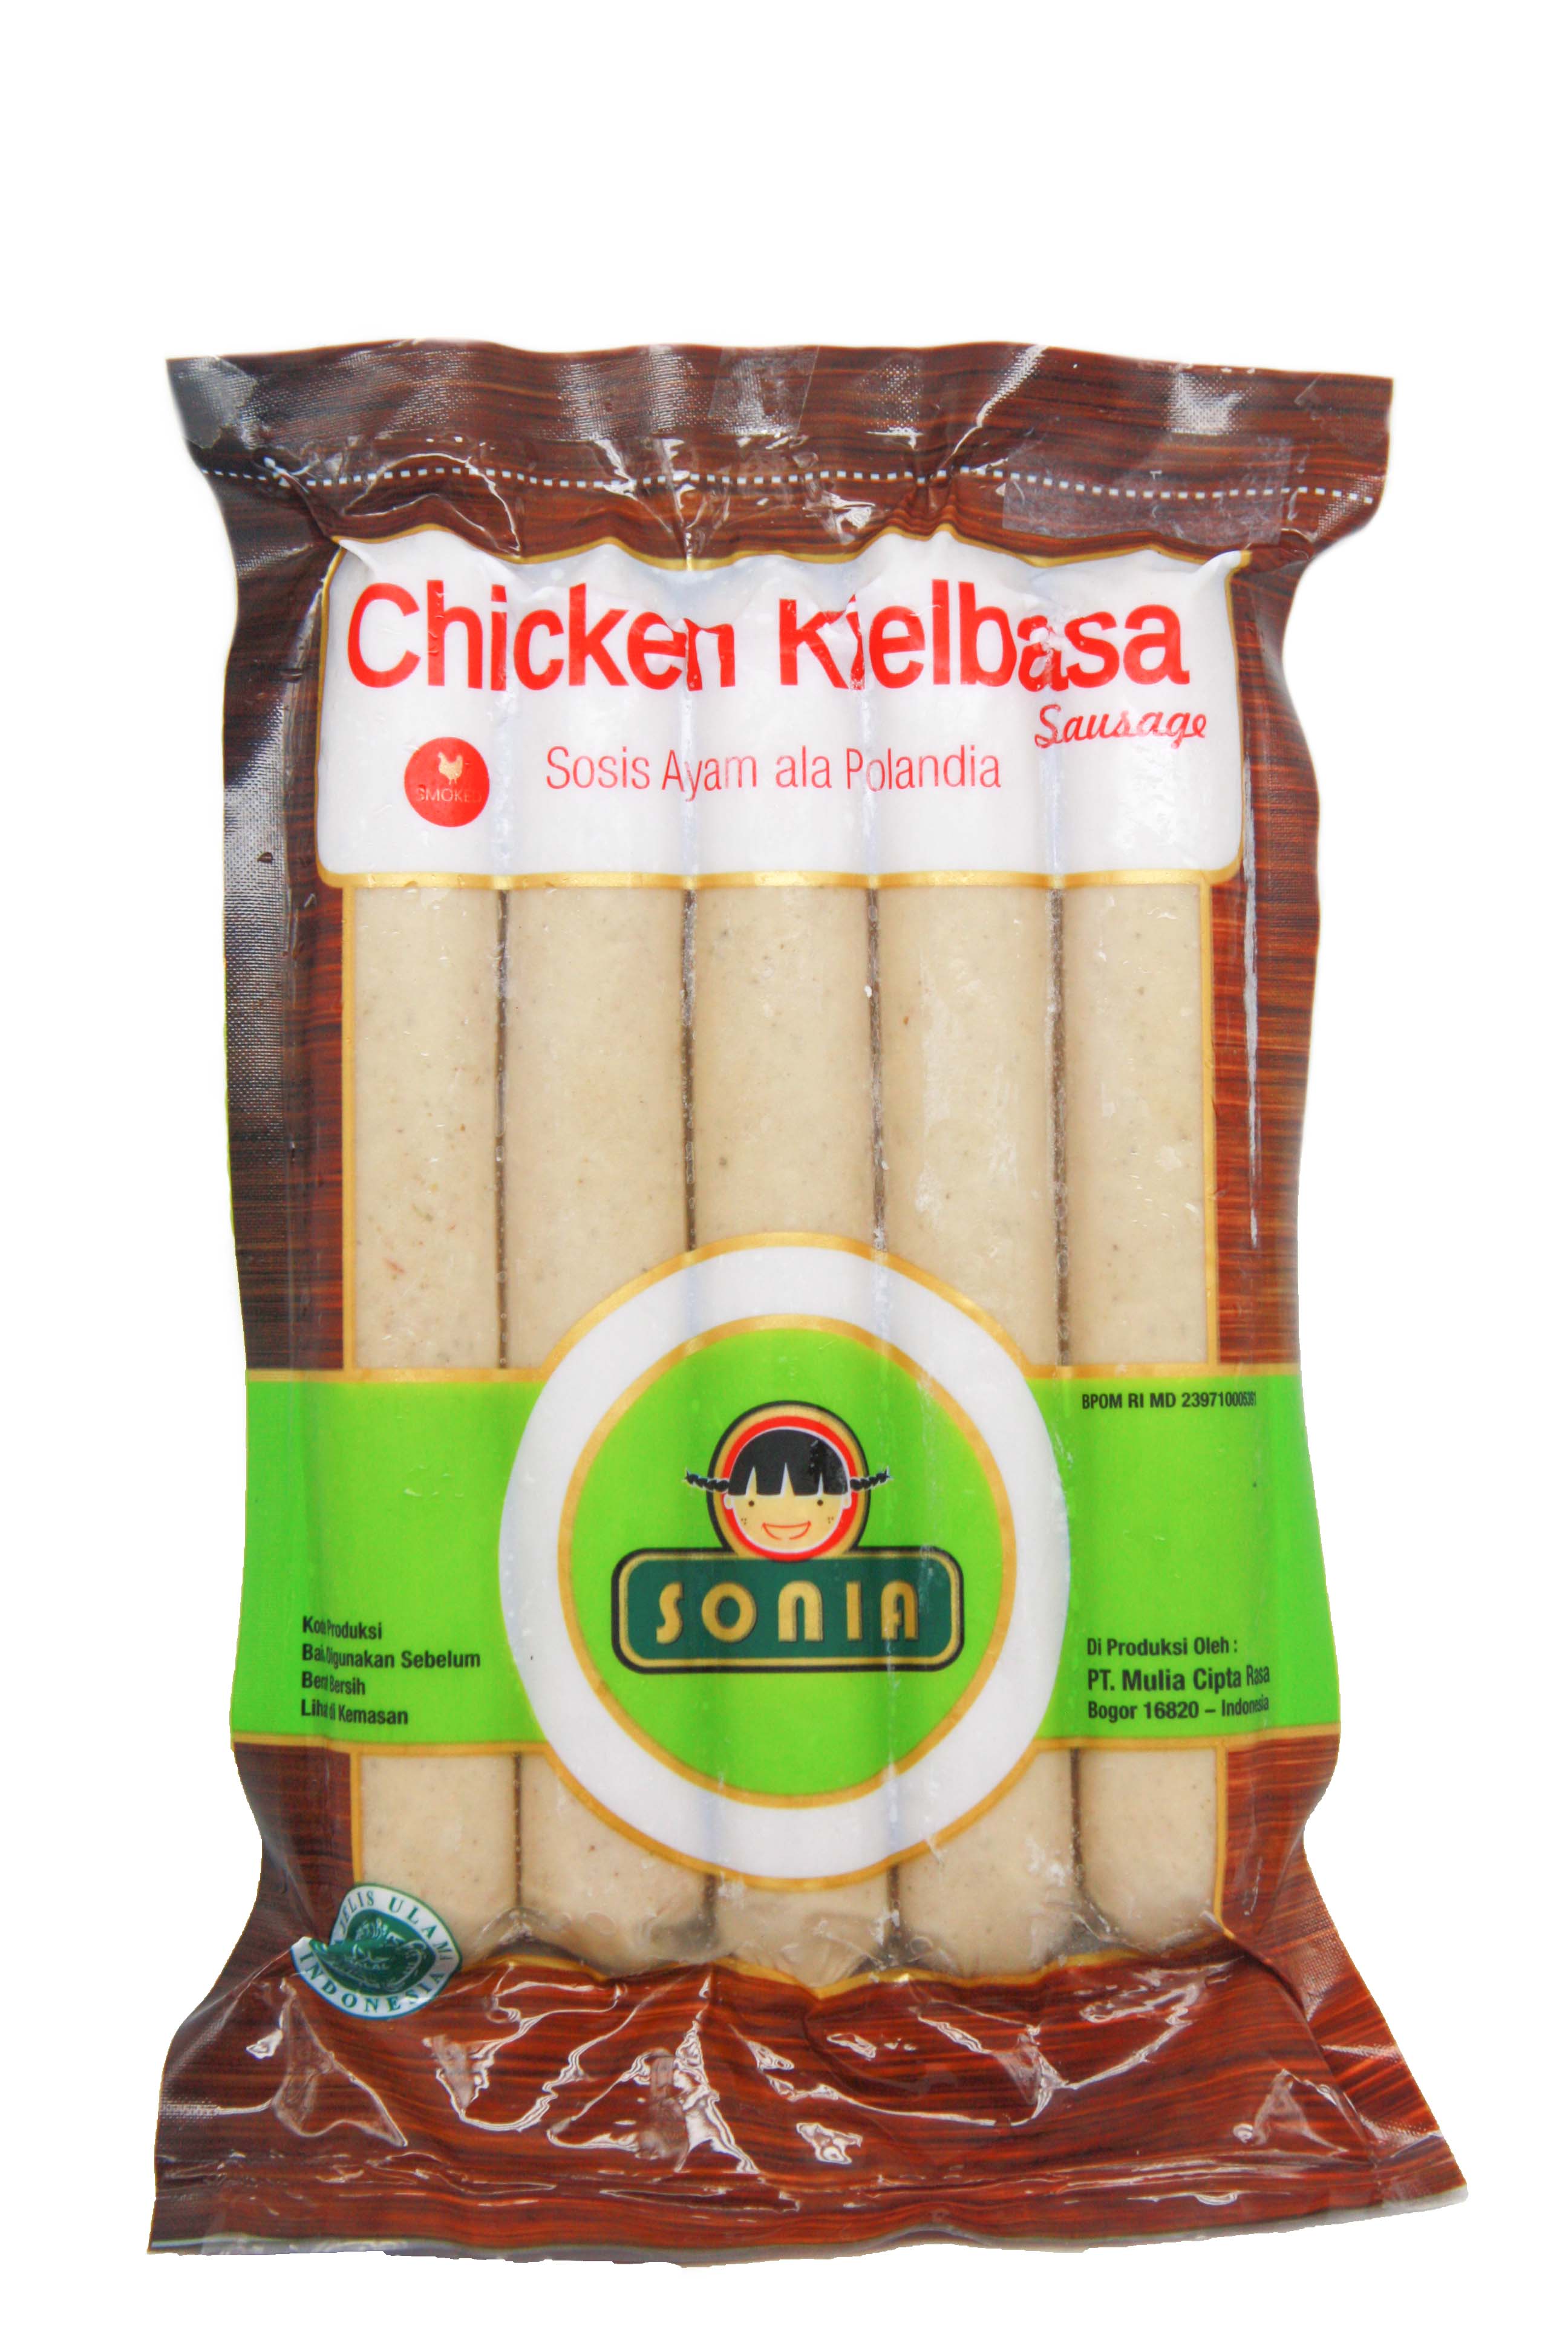 Chicken Kielbasa